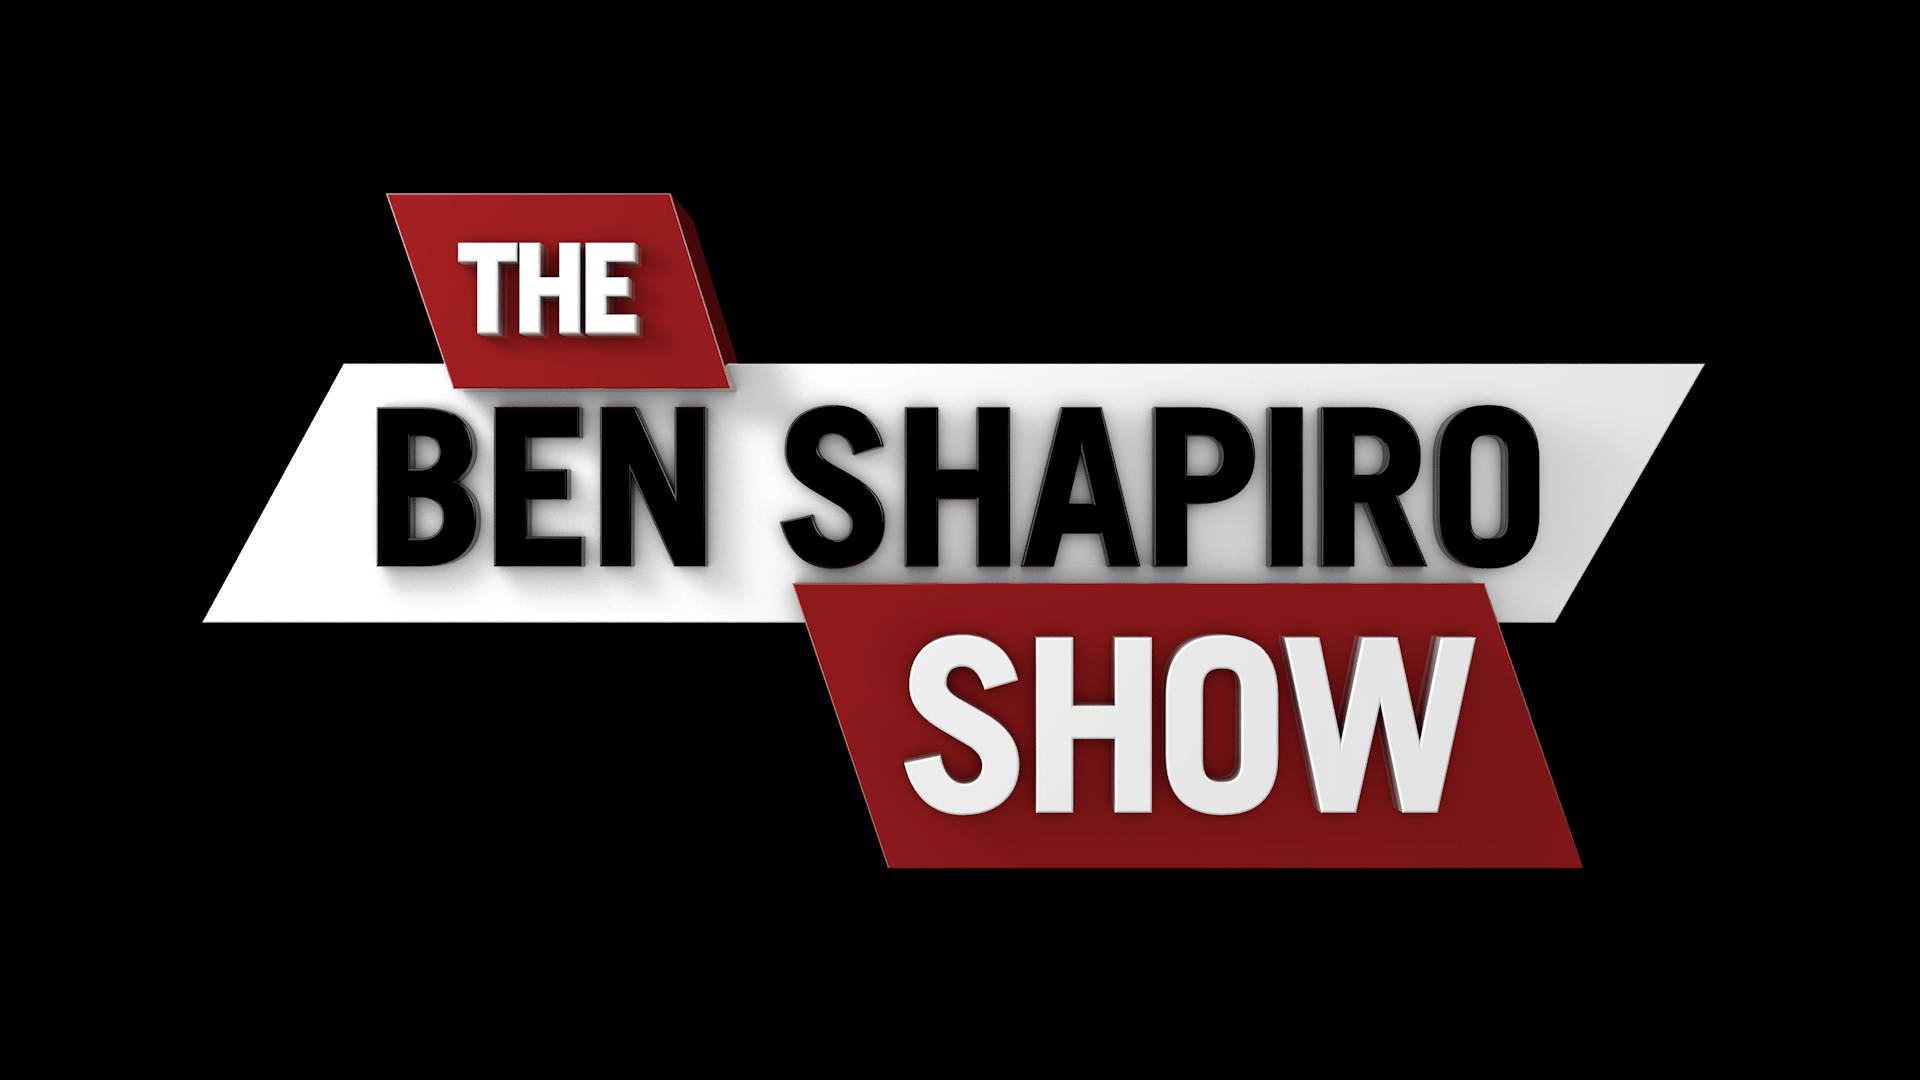 The Ben Shapiro Show Logo Background